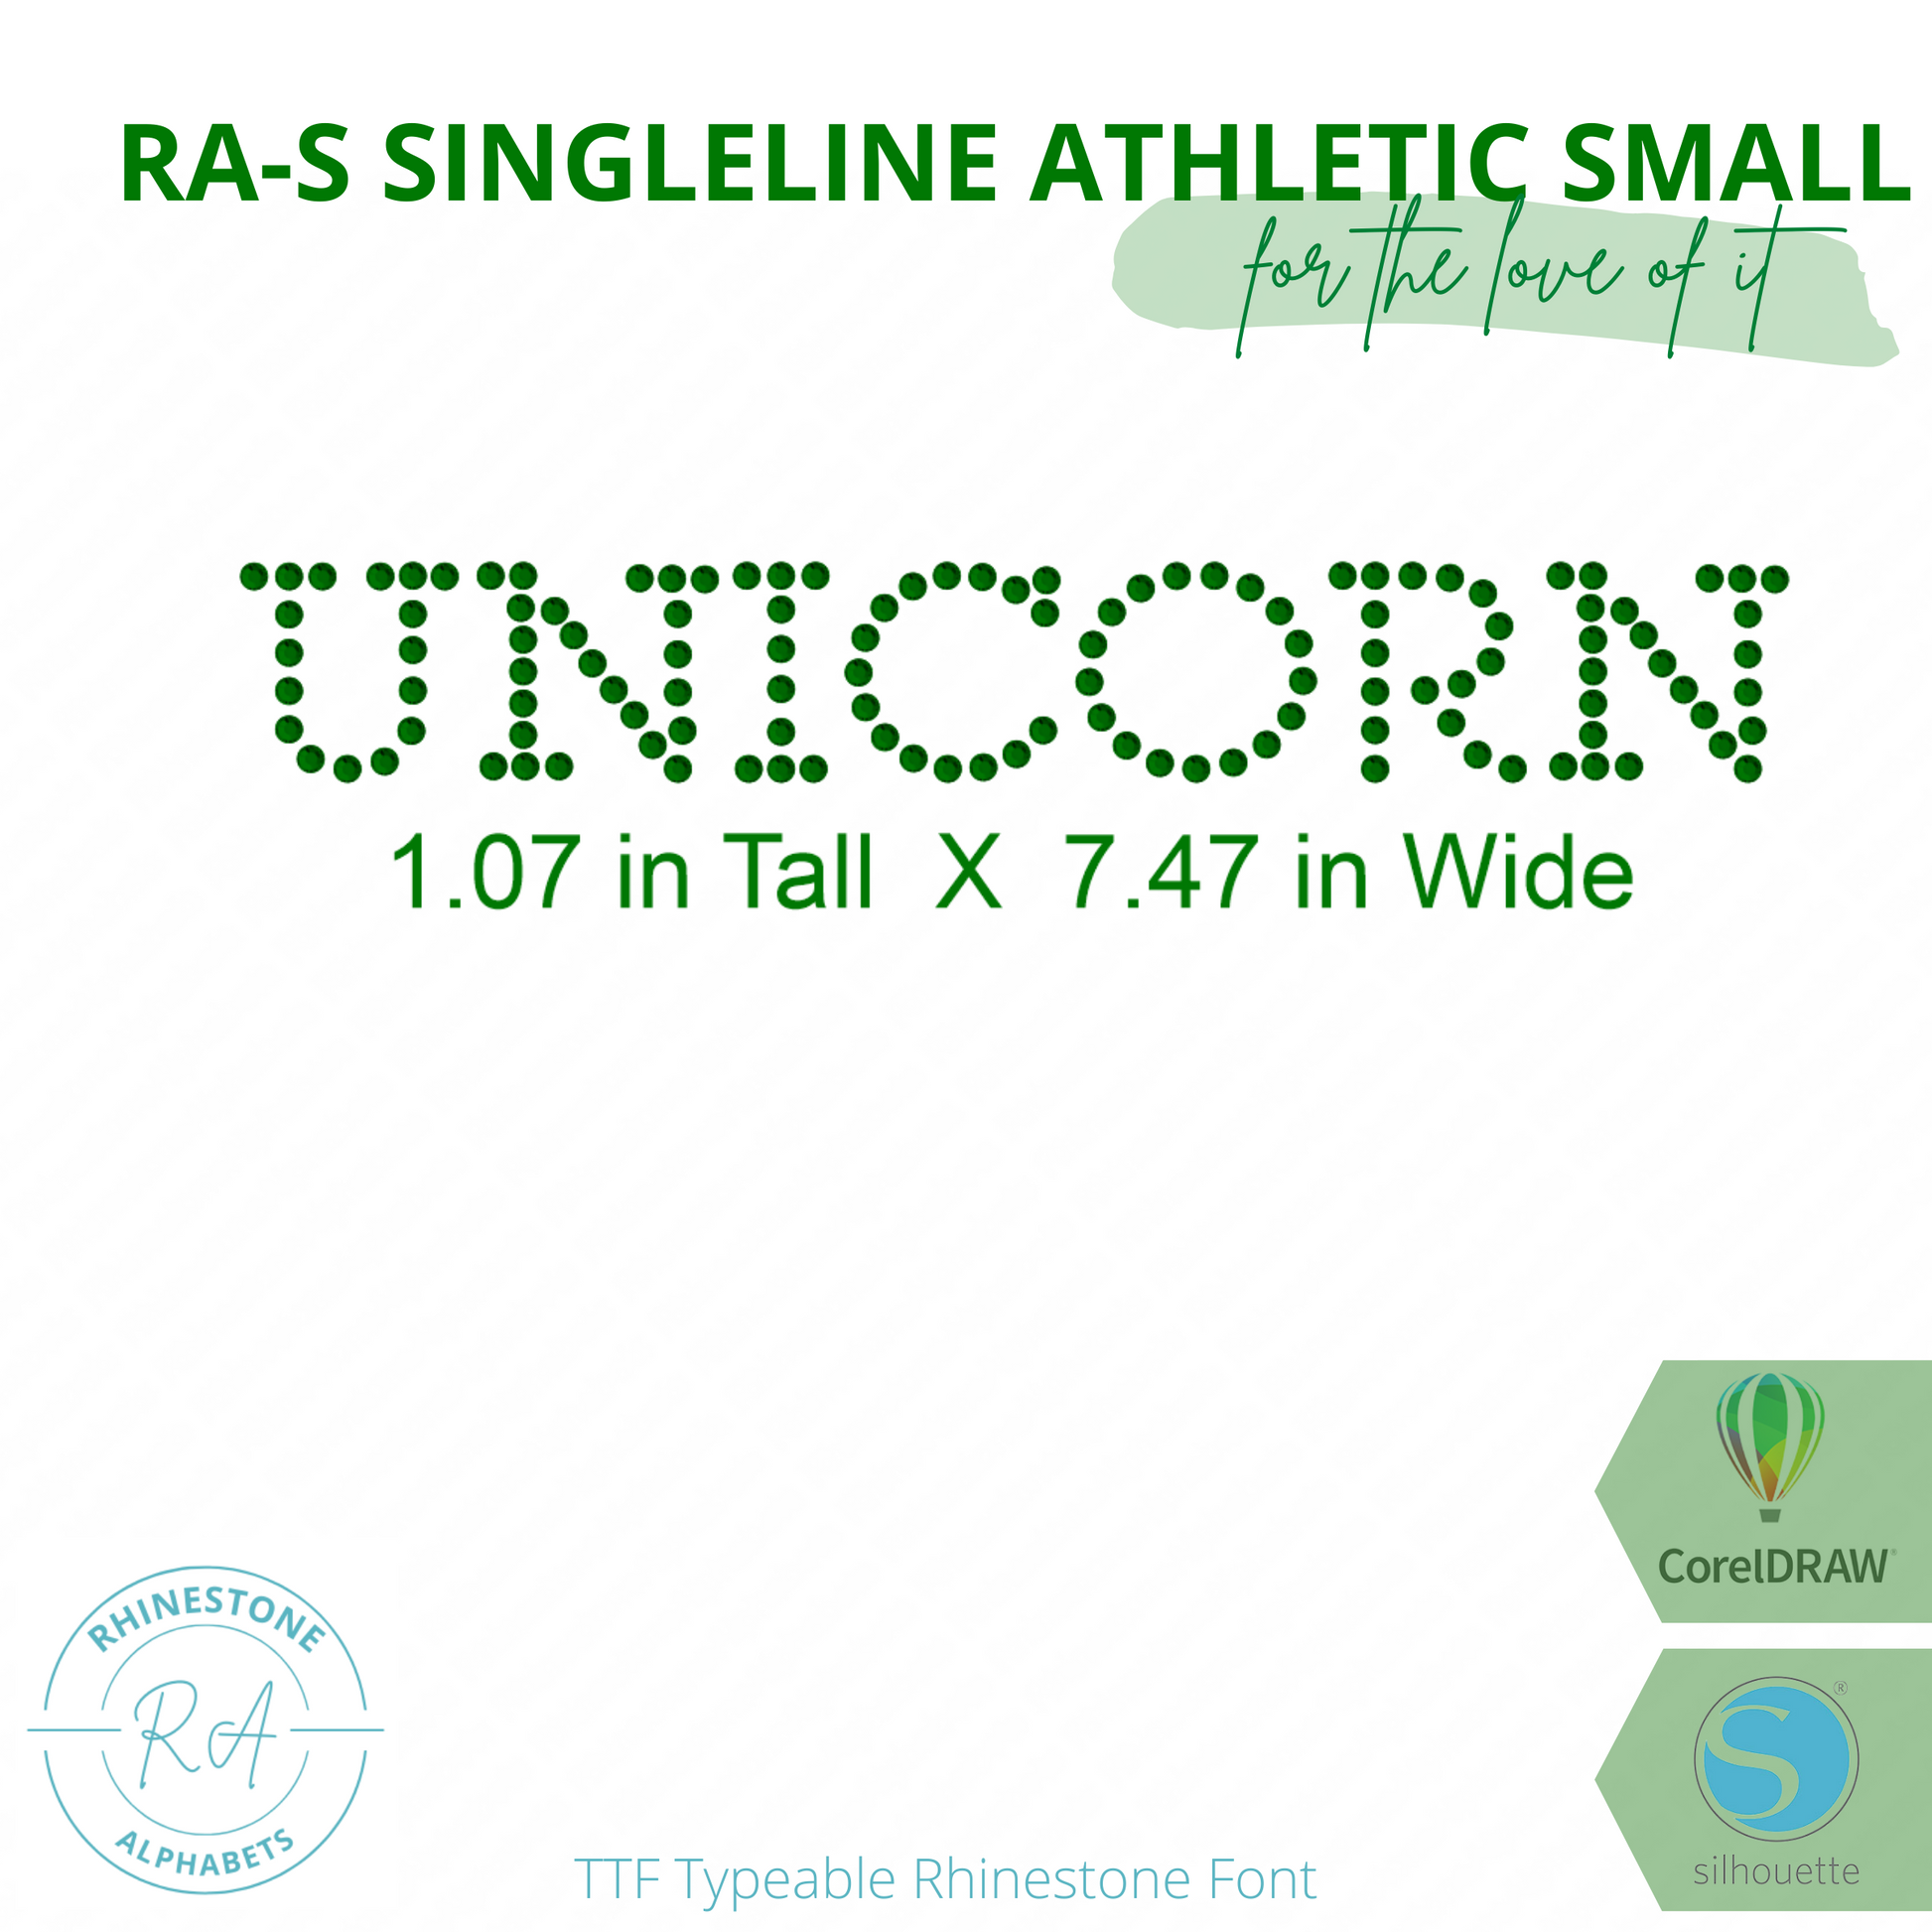 RA-S Singleline Athletic Small - RhinestoneAlphabets